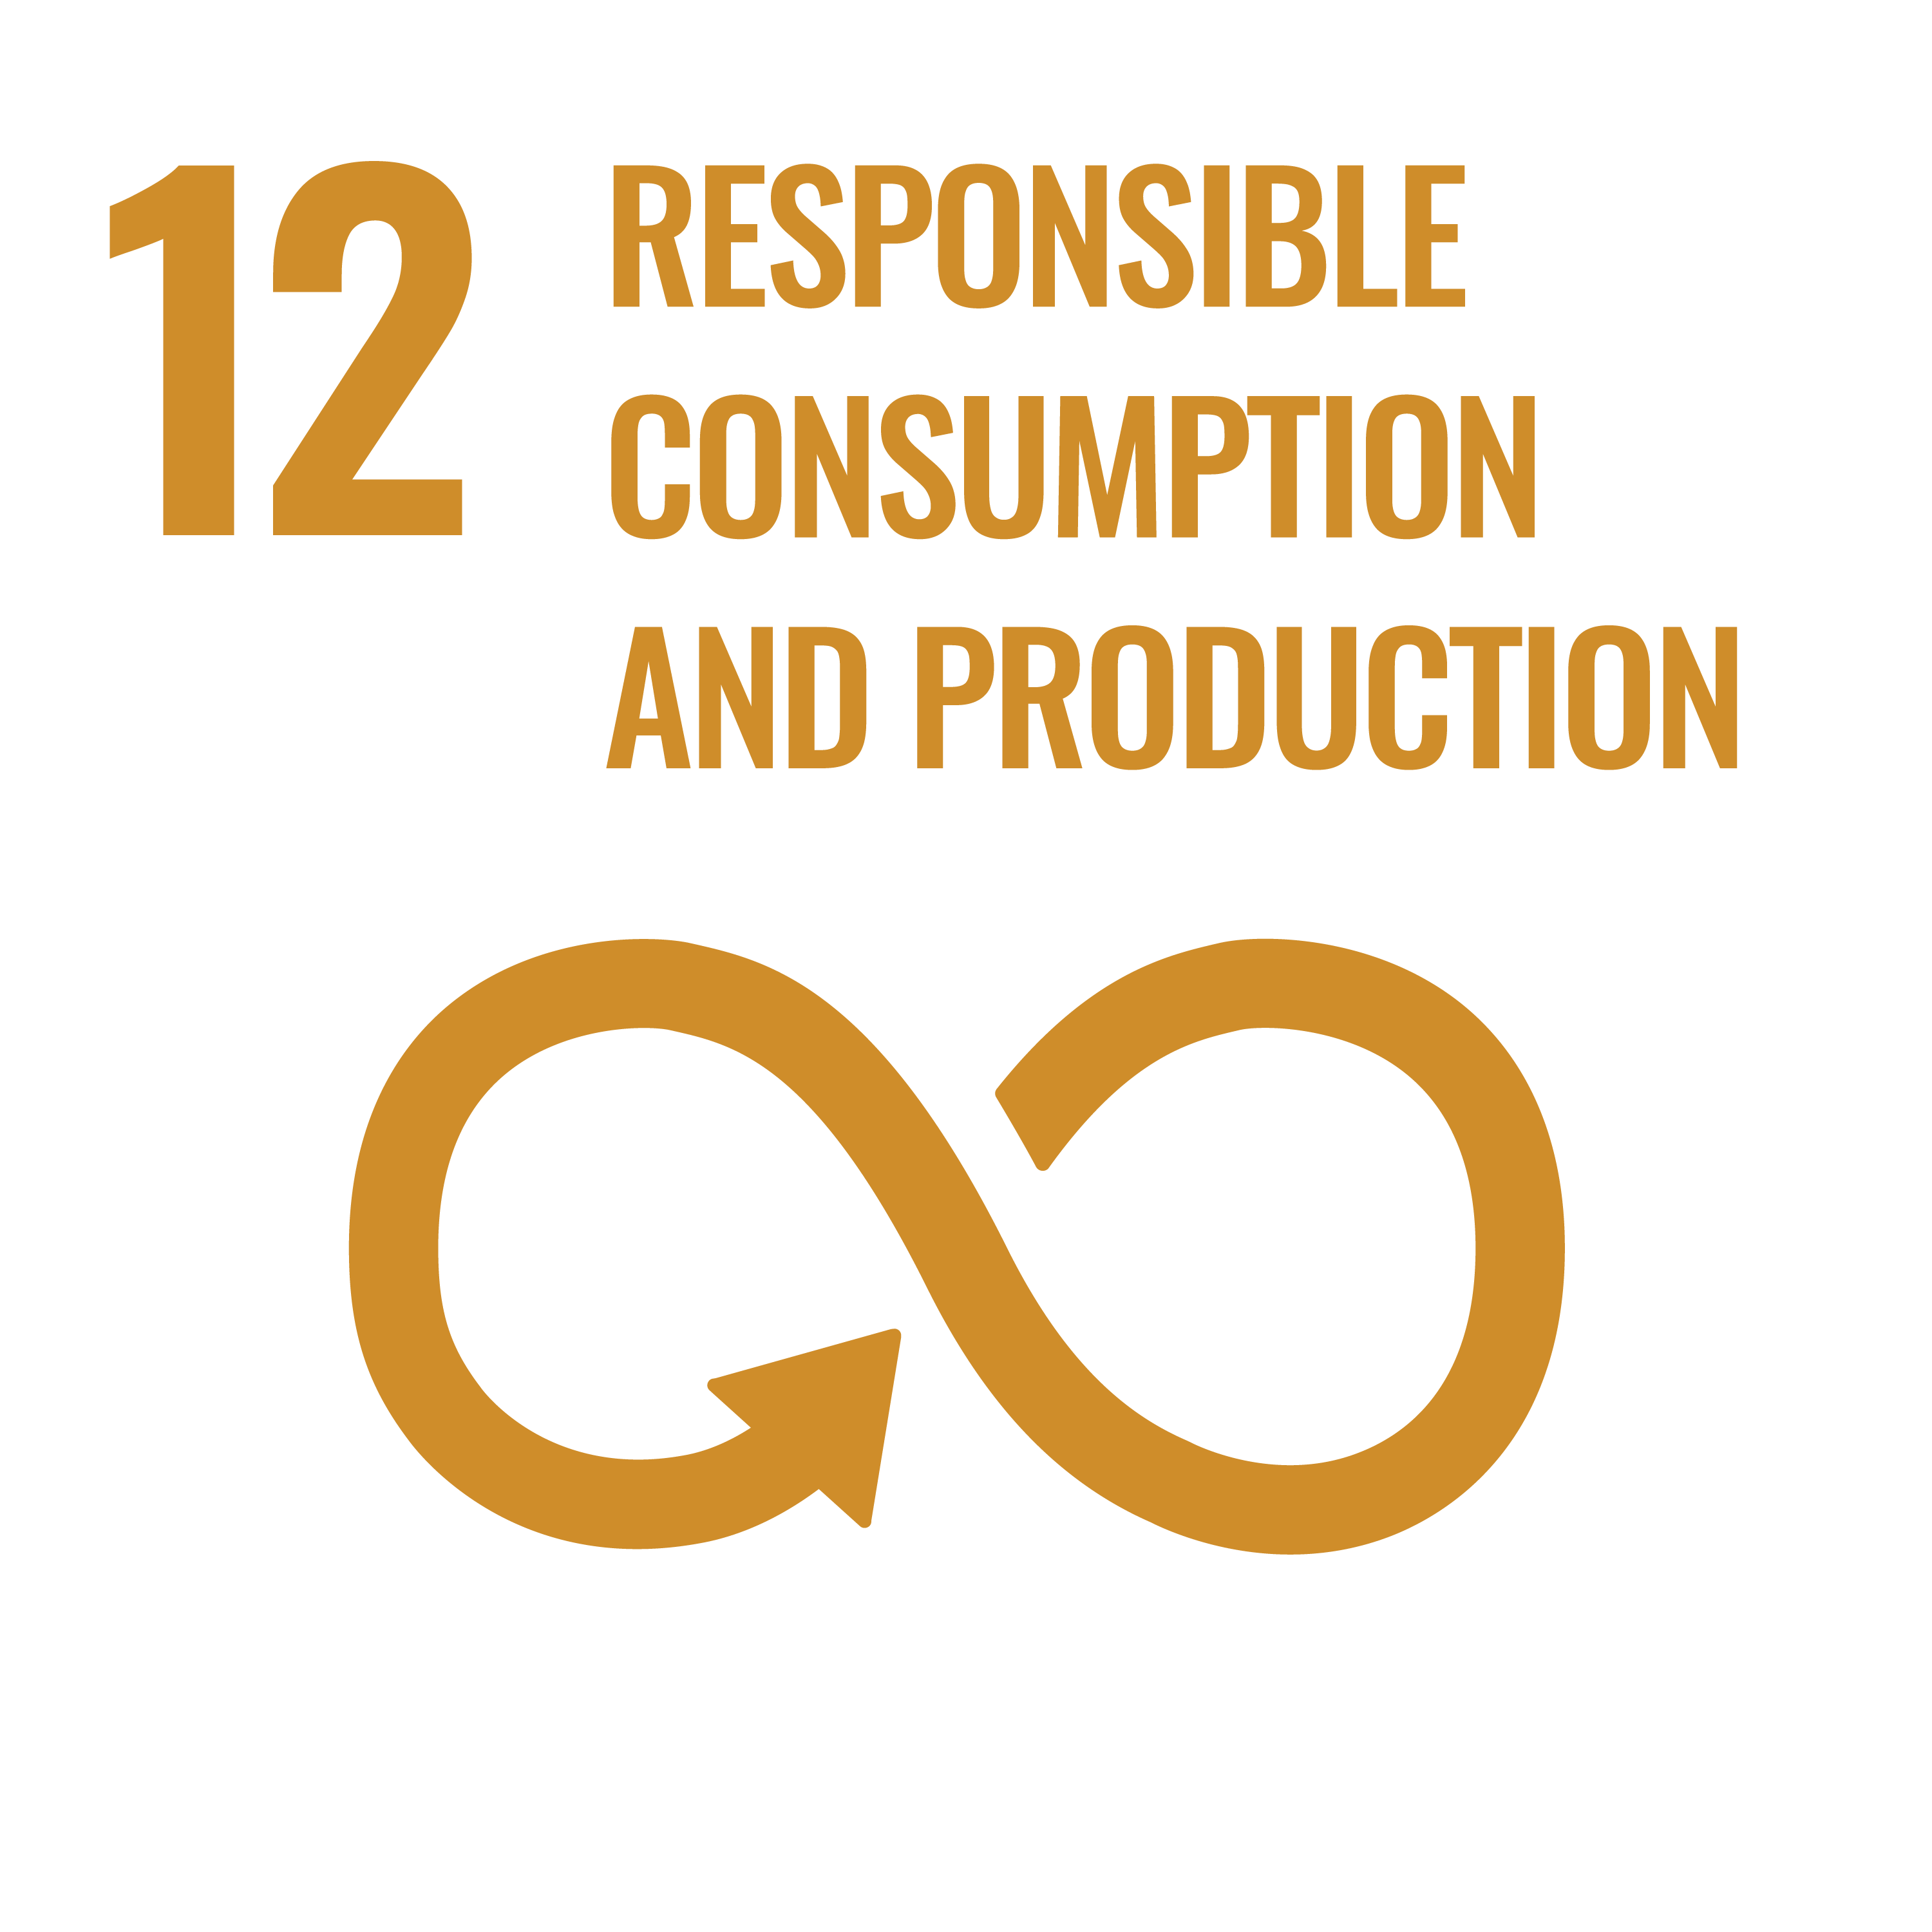 Sustainable development goal 12 - logo